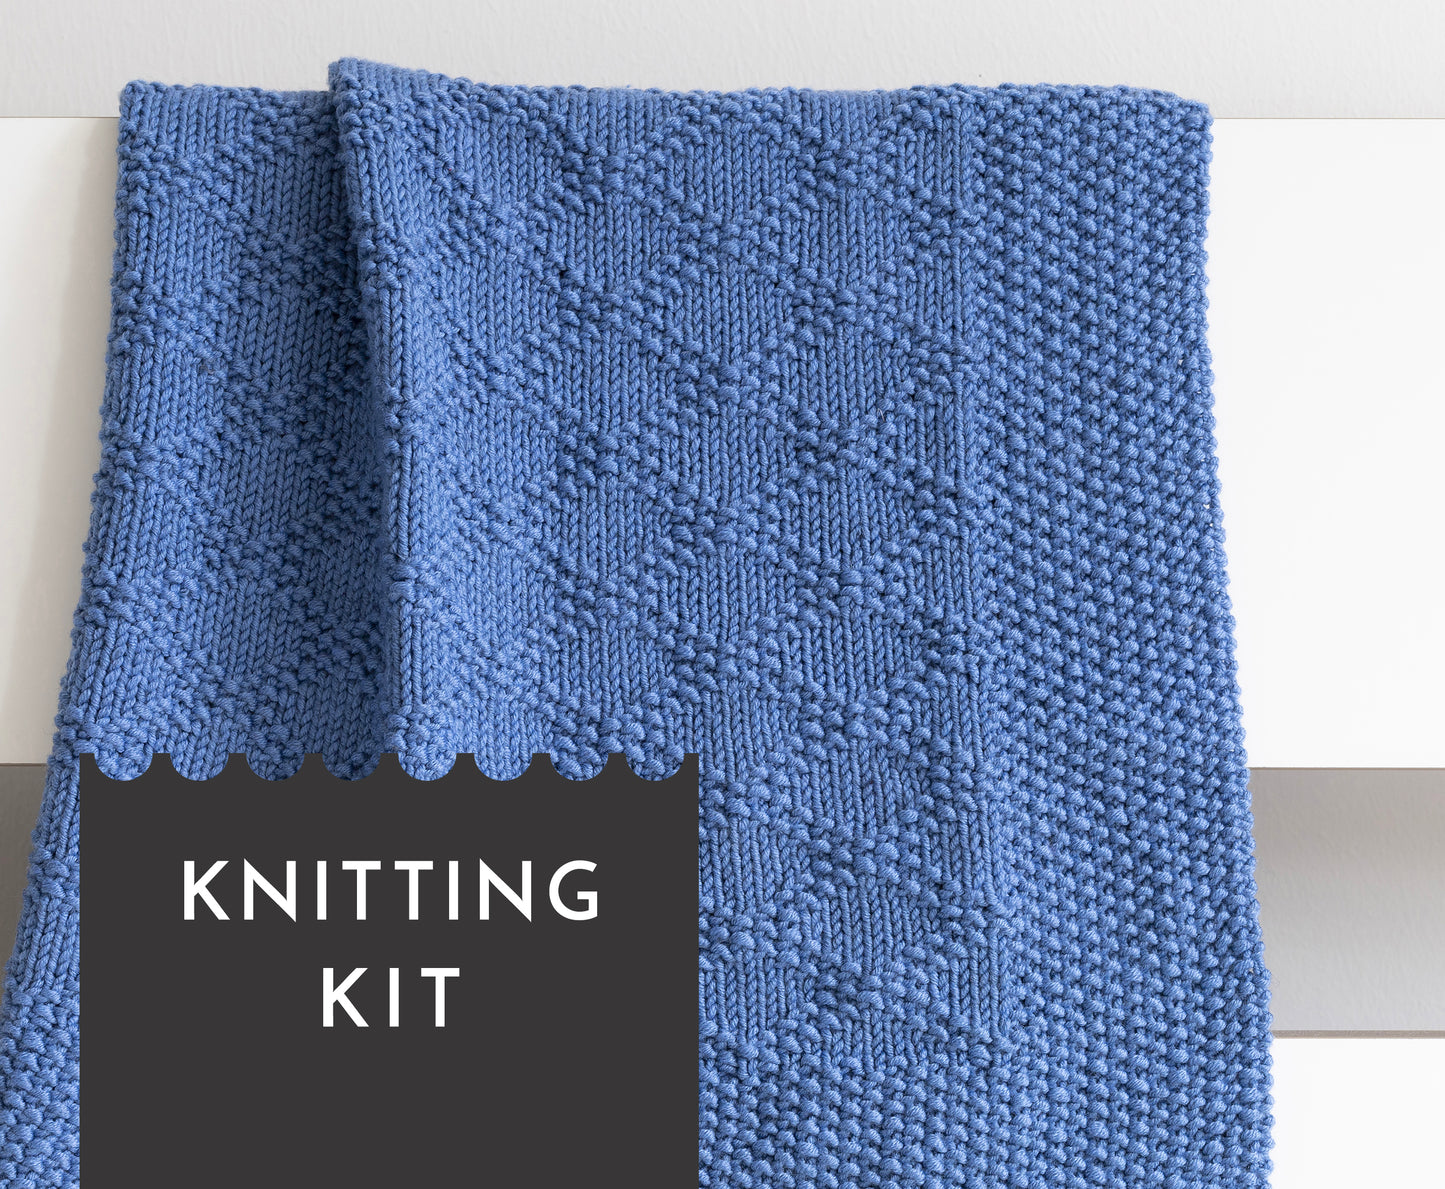 Merino wool hand-knitted baby blanket in Charles Brocade knitting pattern